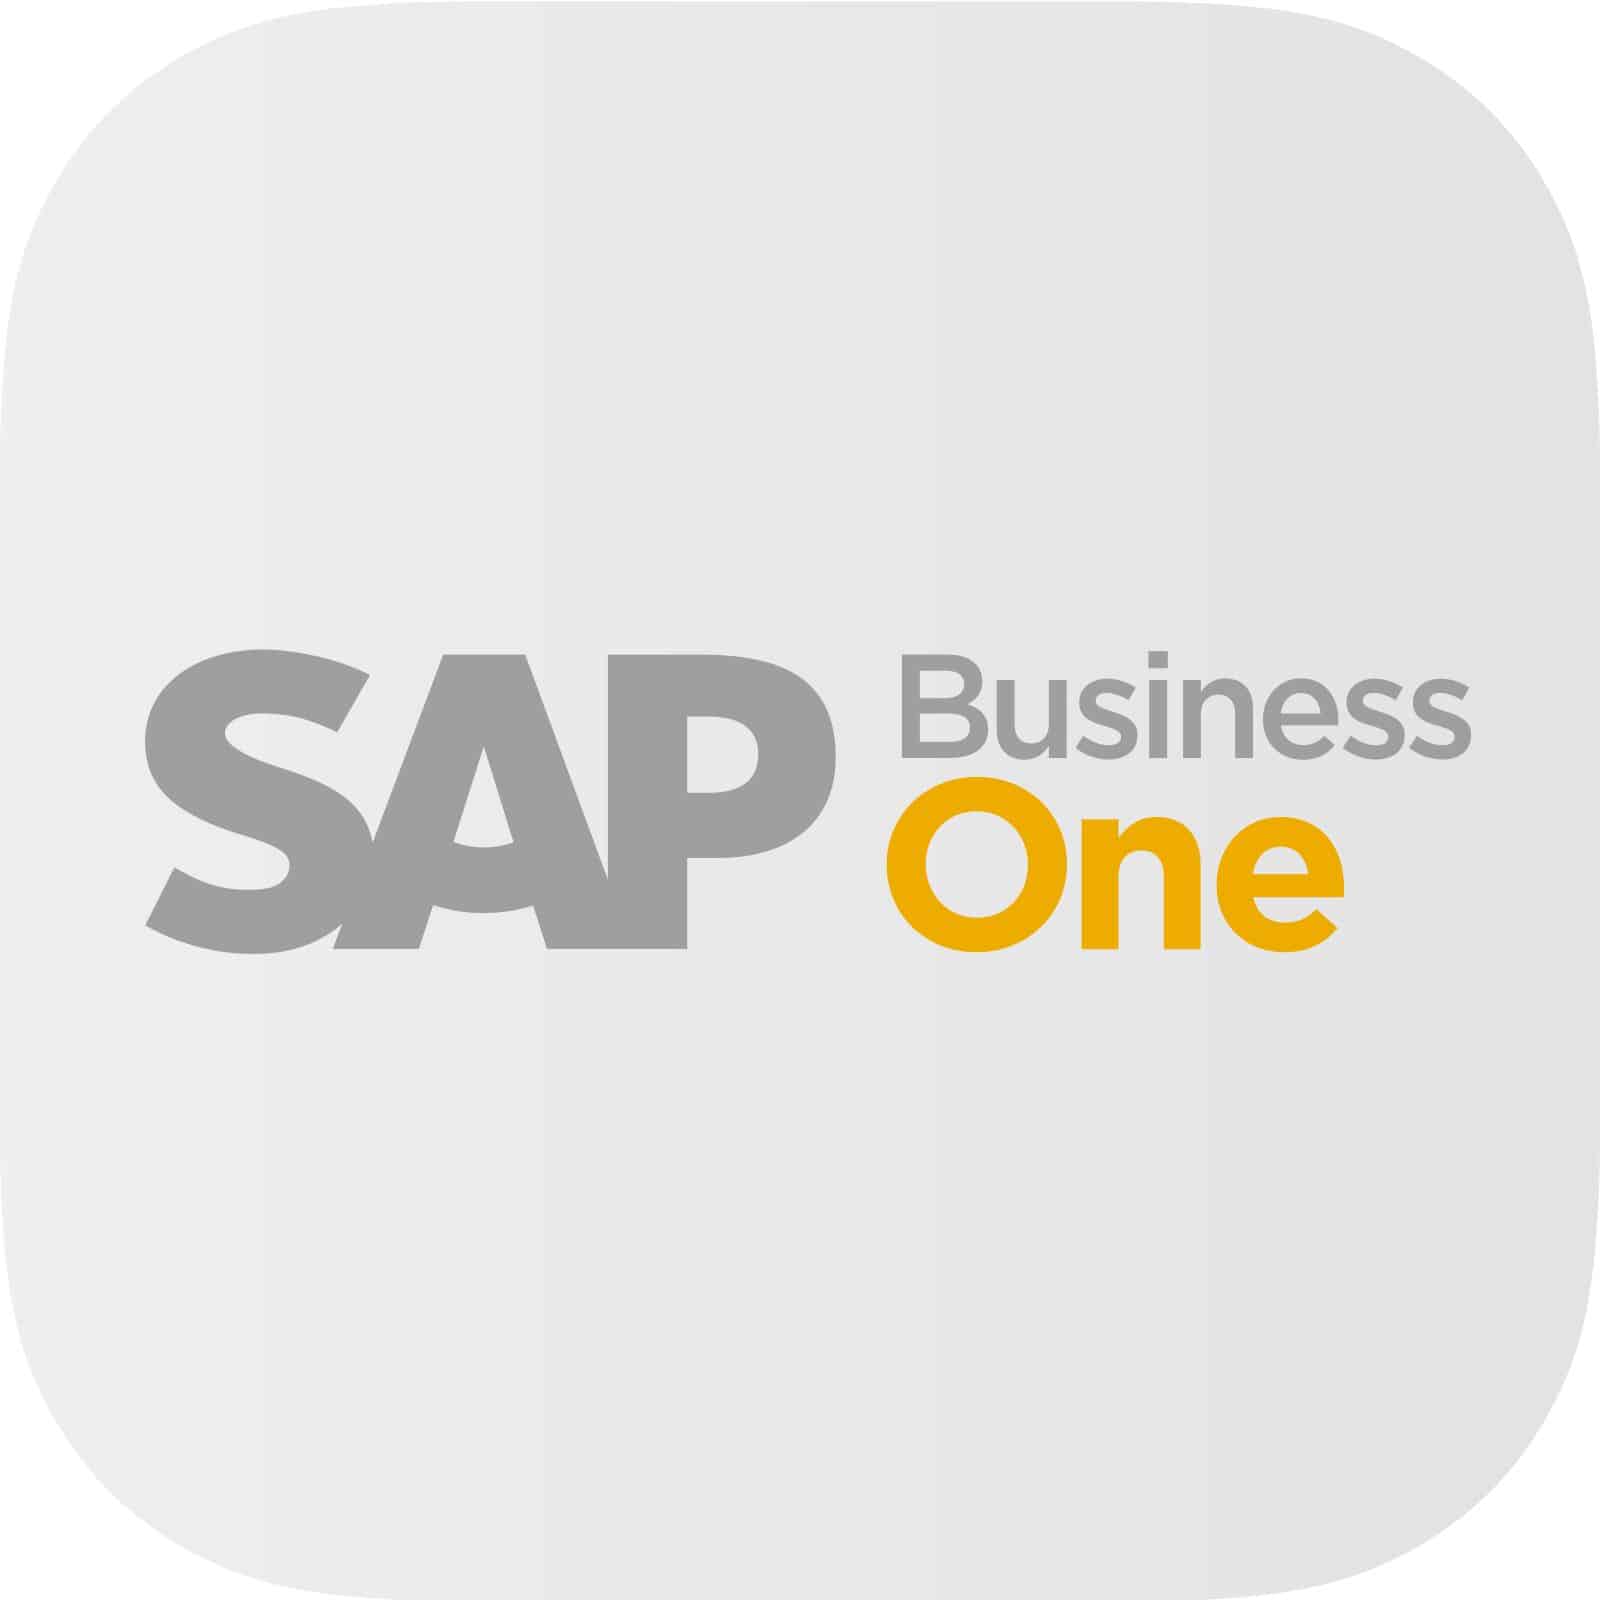 Sap business one integration logo icon